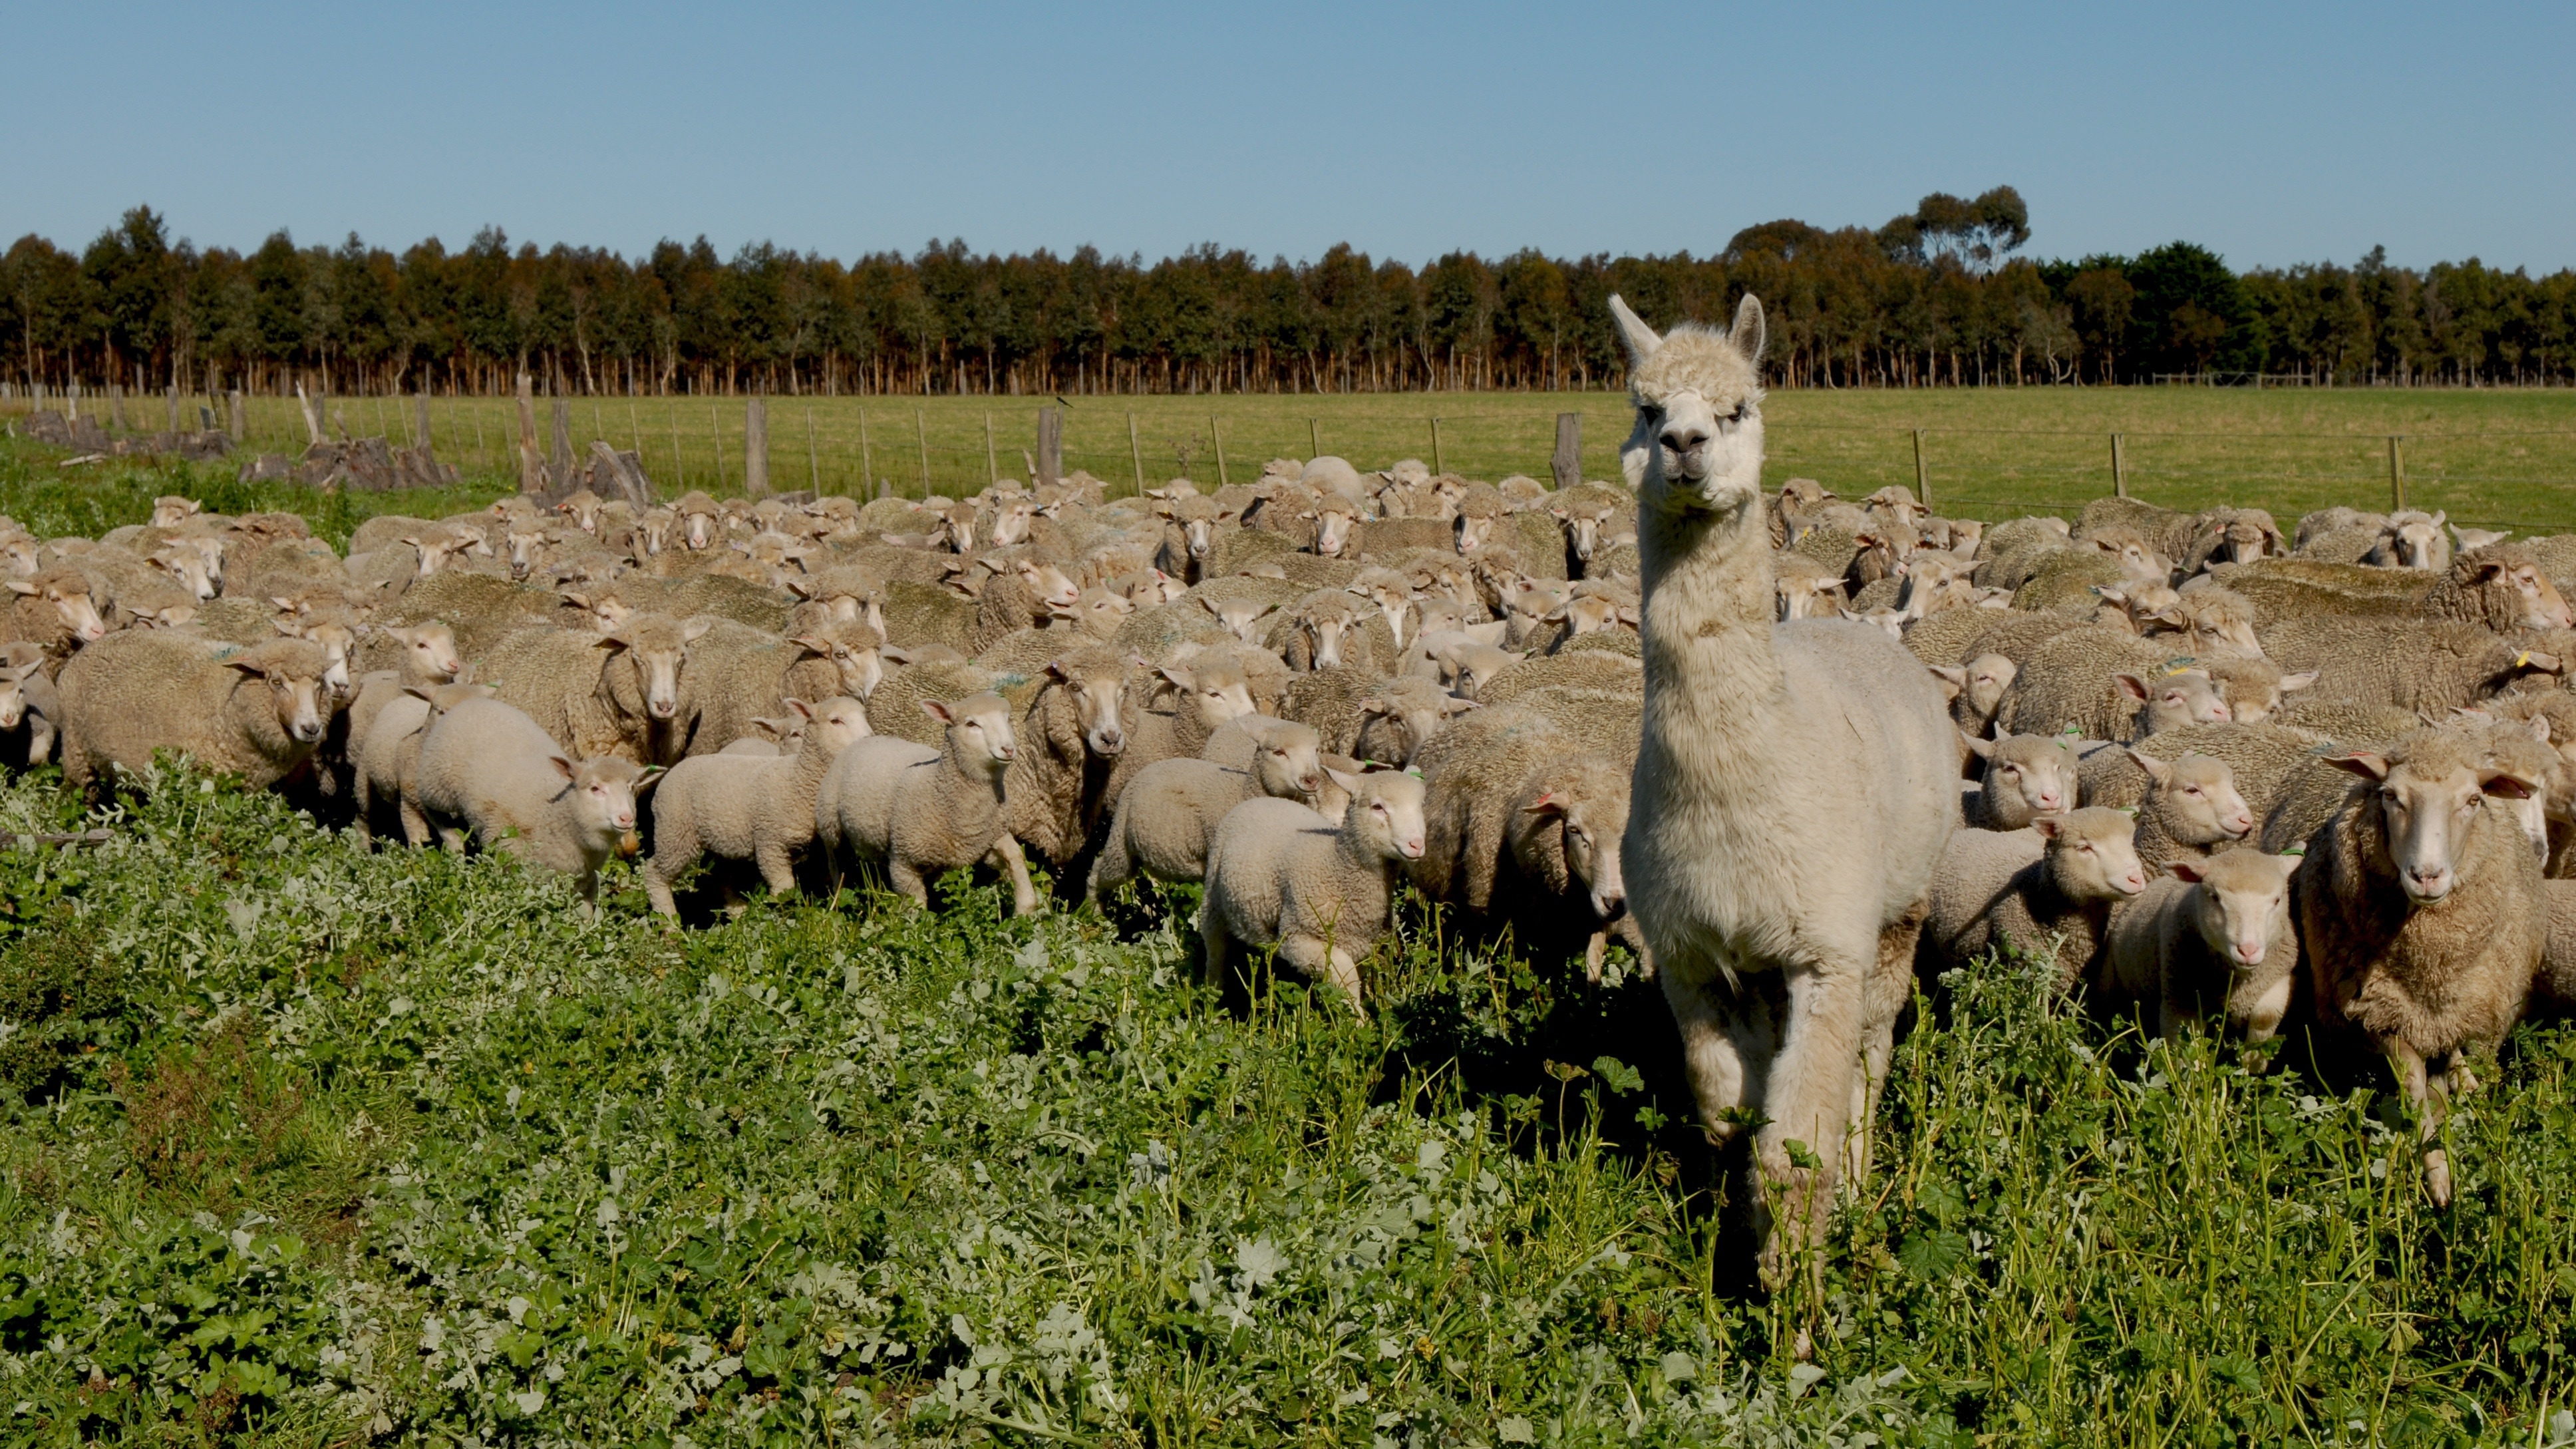 beige alpaca with flock of sheep